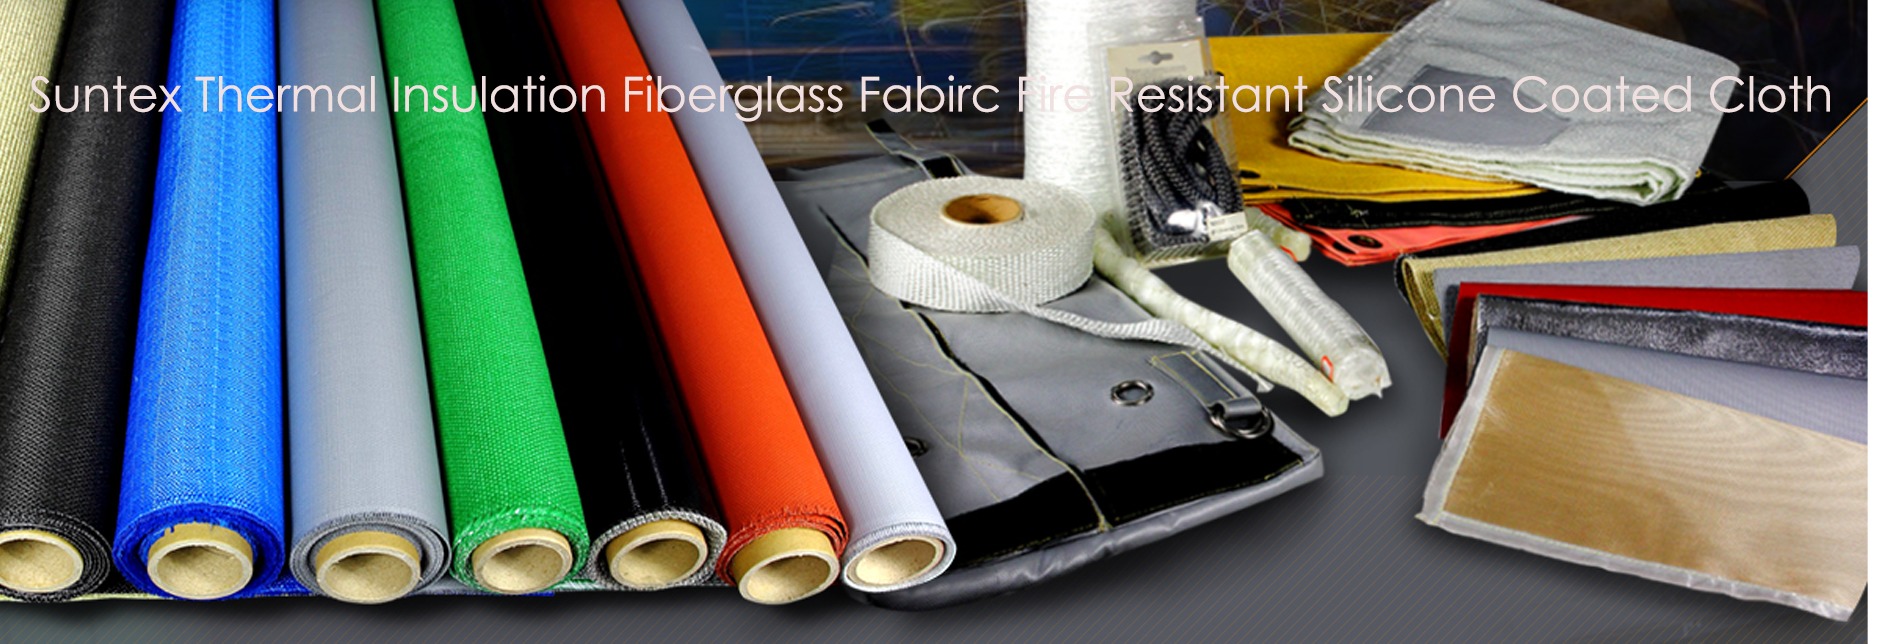 Suntex Thermal Insulation Fiberglass Fabirc Fire Resistant Silicone Coated Cloth